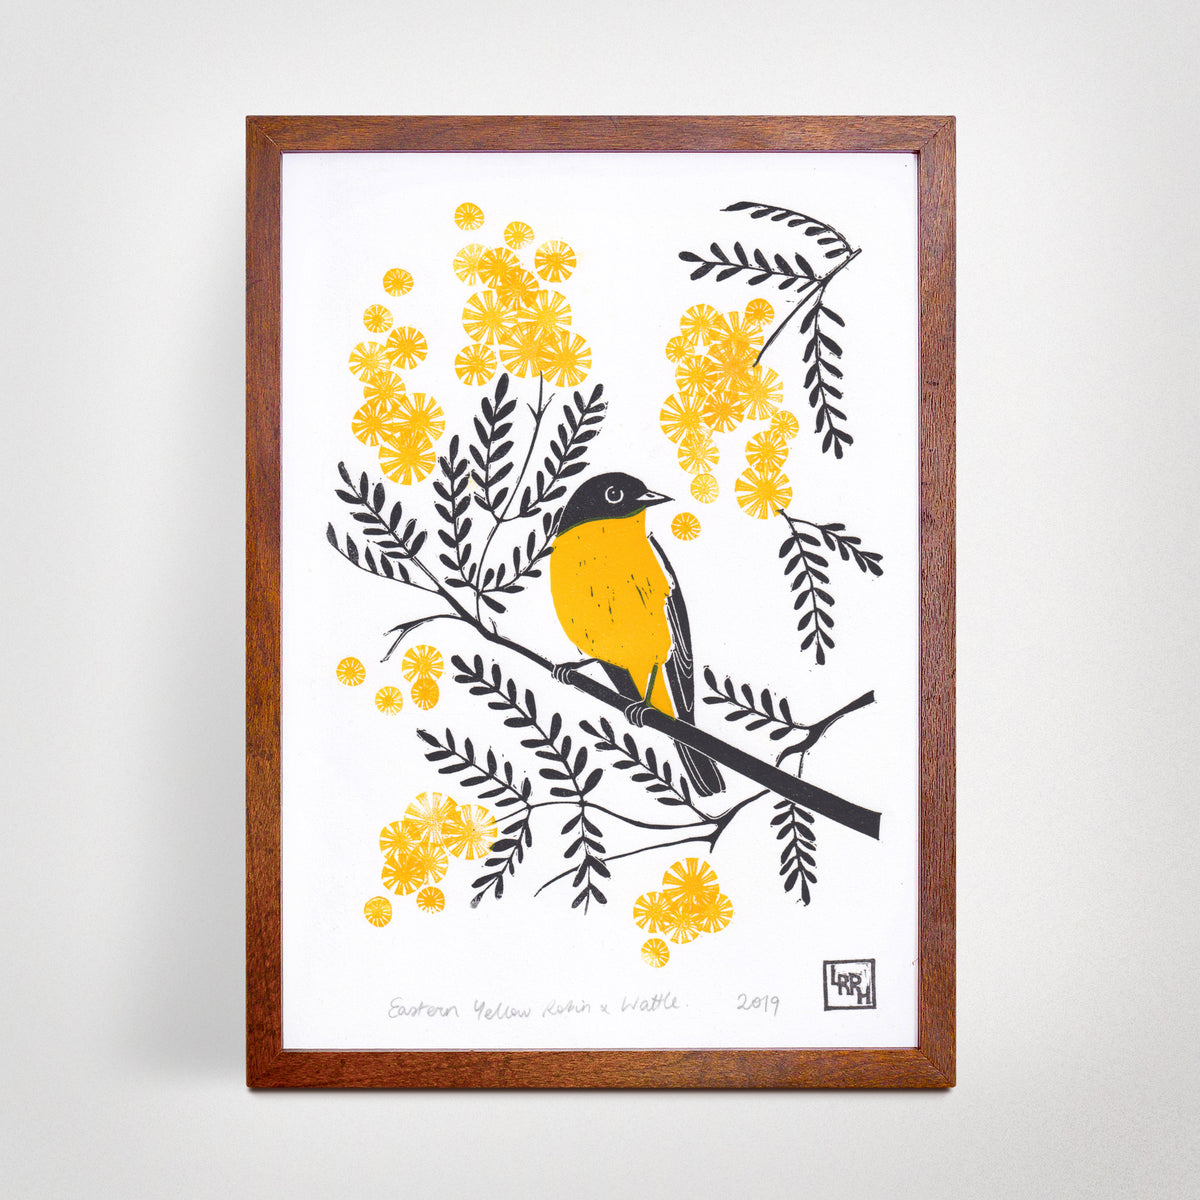 &#39;Eastern Yellow Robin and Wattle&#39; Linoprint, Australian native bird, original artwork, handmade in Sydney